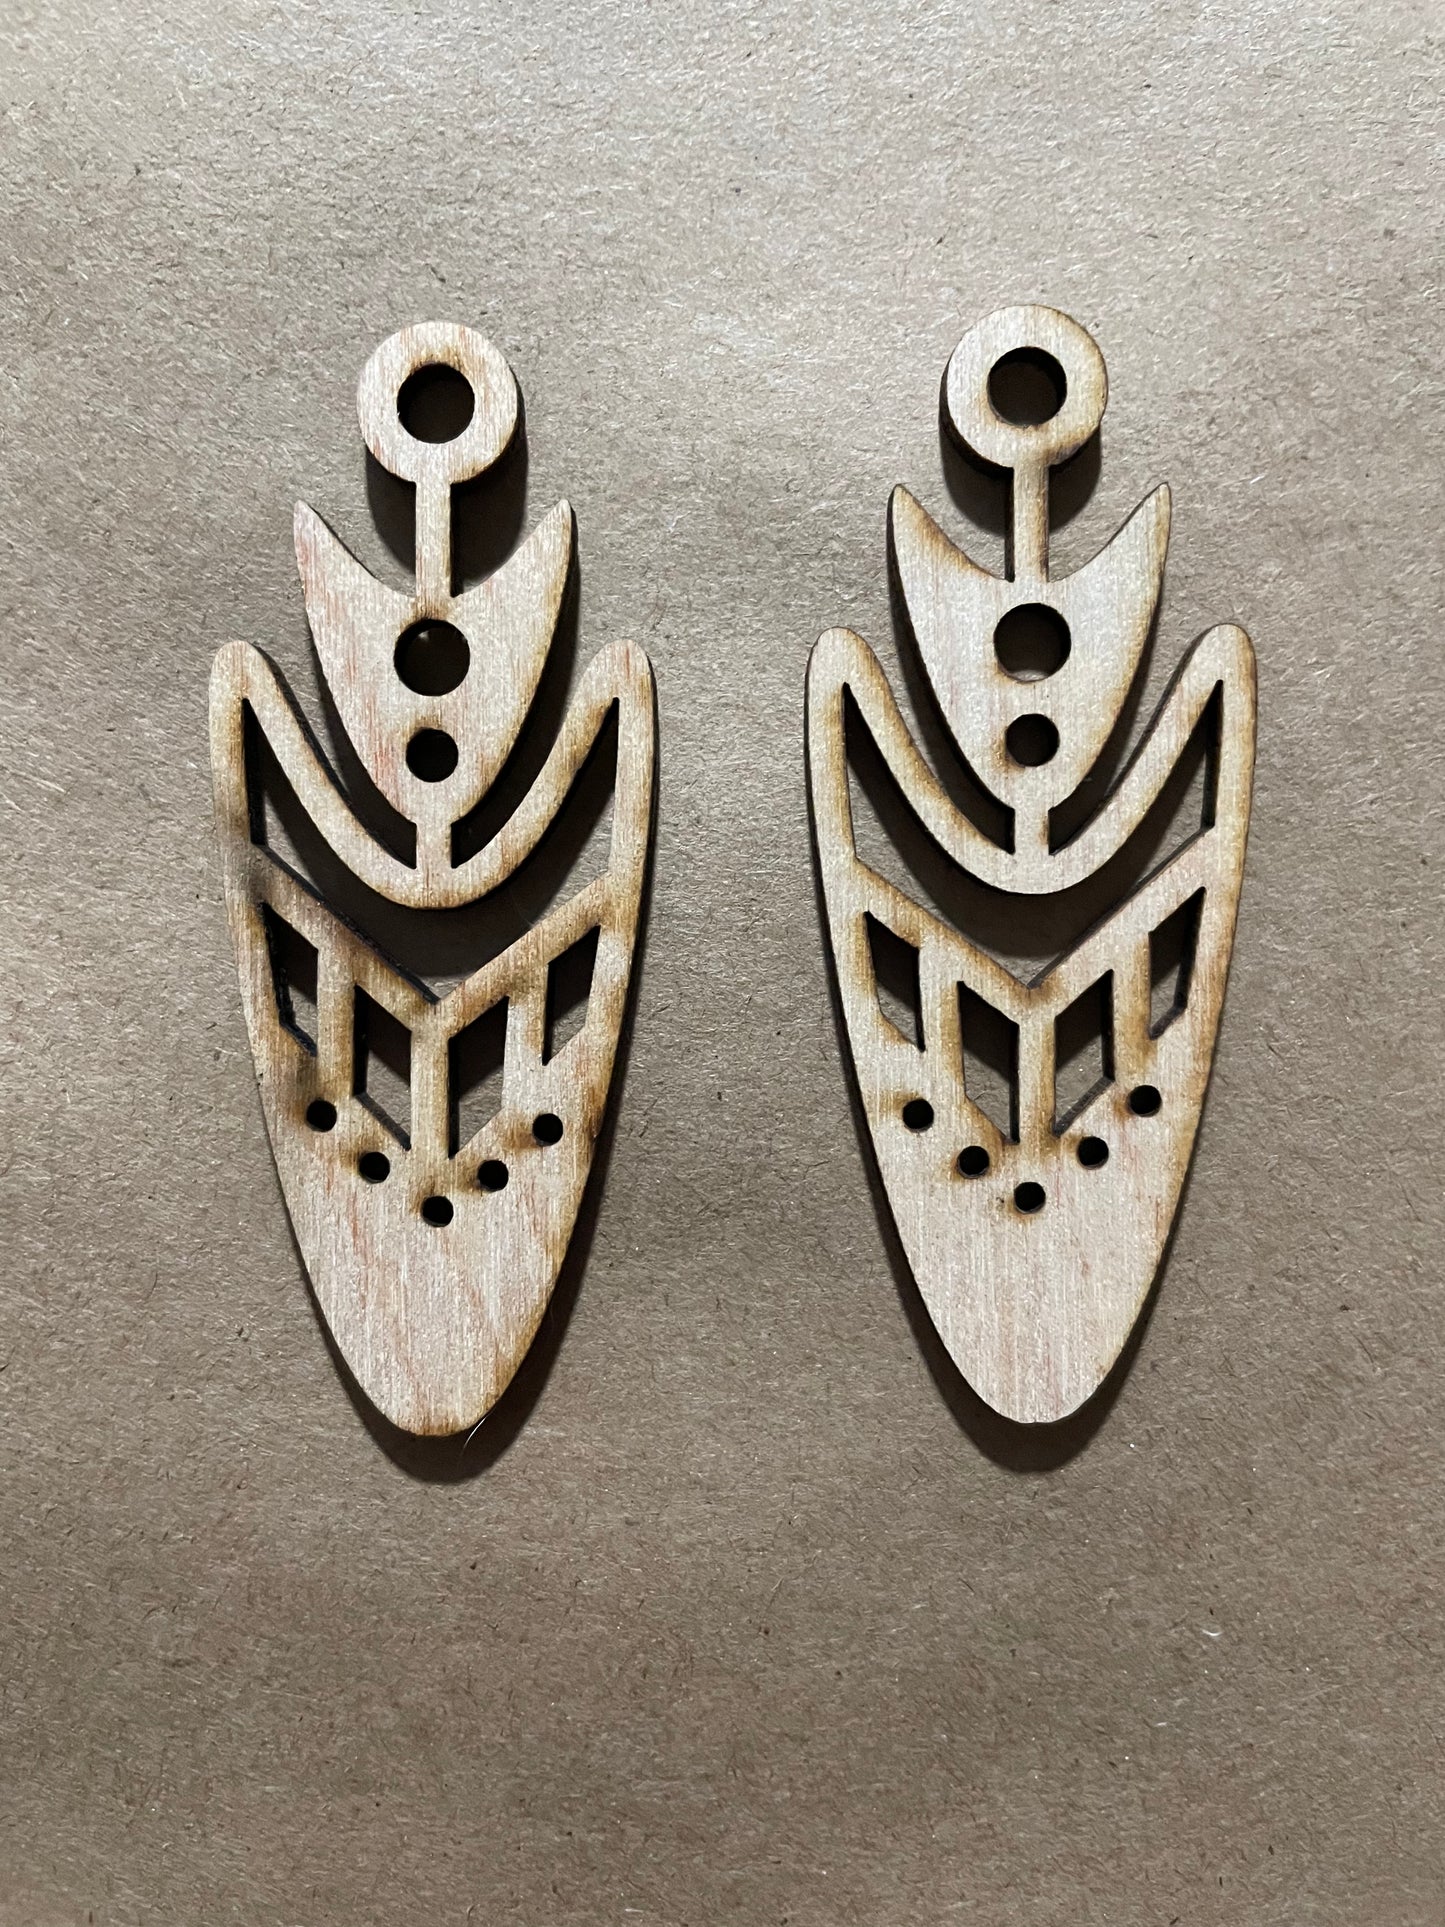 Rounded Arrowhead Blank Wood Earrings. DIY jewelry. Unfinished laser cut wood jewelry. Wood earring blanks. Unfinished wood earrings. Wood jewelry blanks.